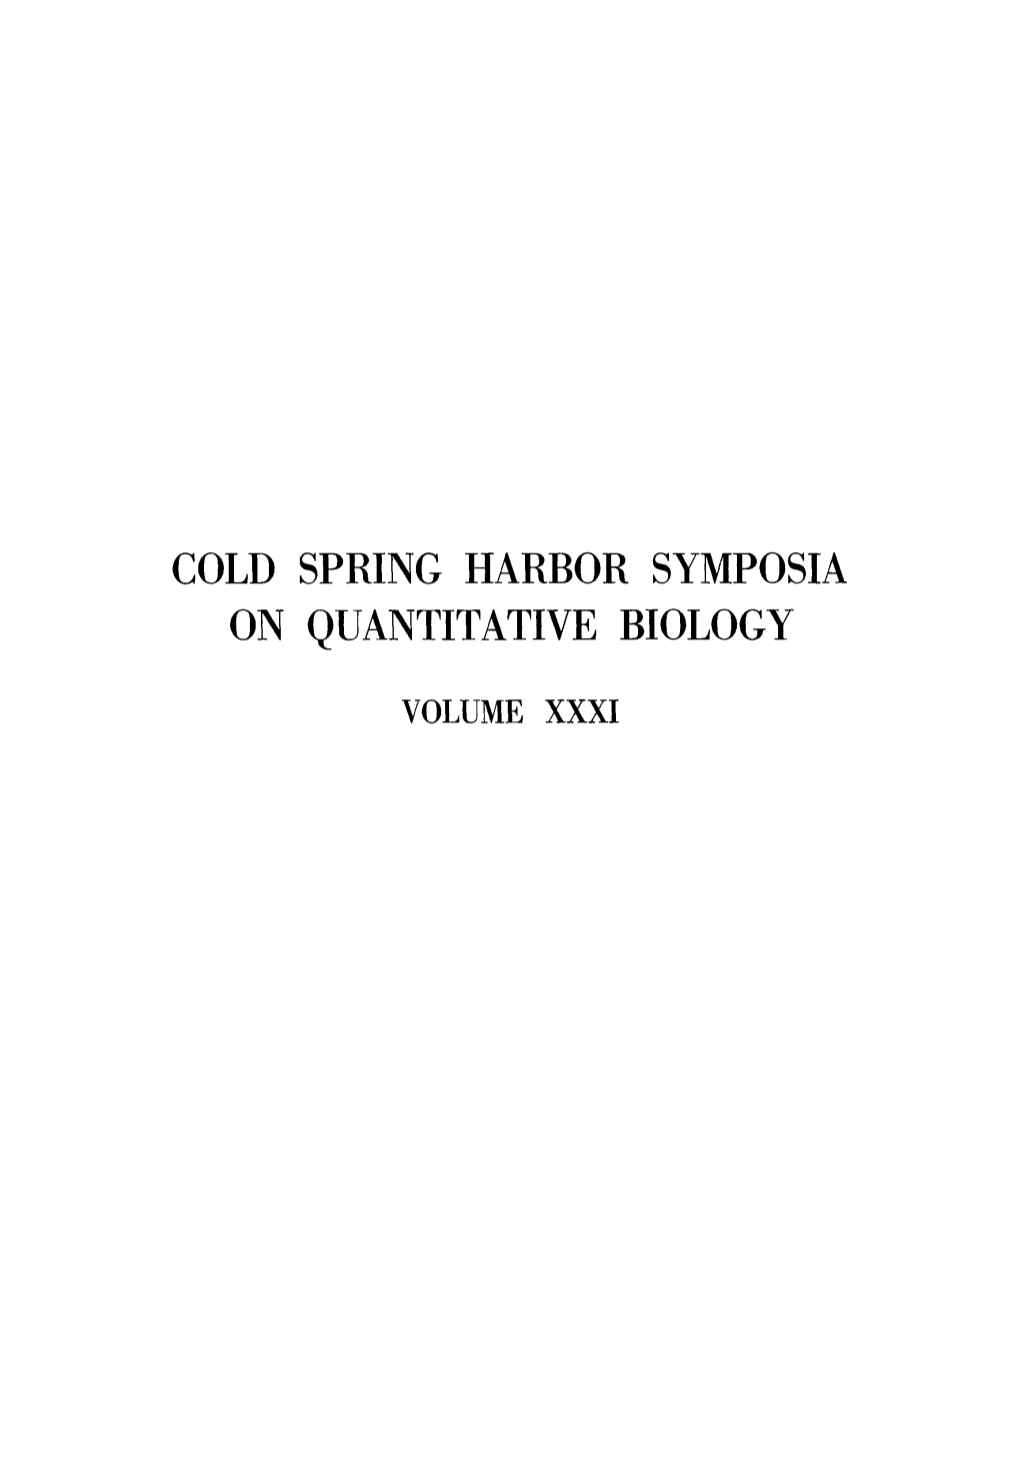 Cold Spring Harbor Symposia on Quantitative Biology